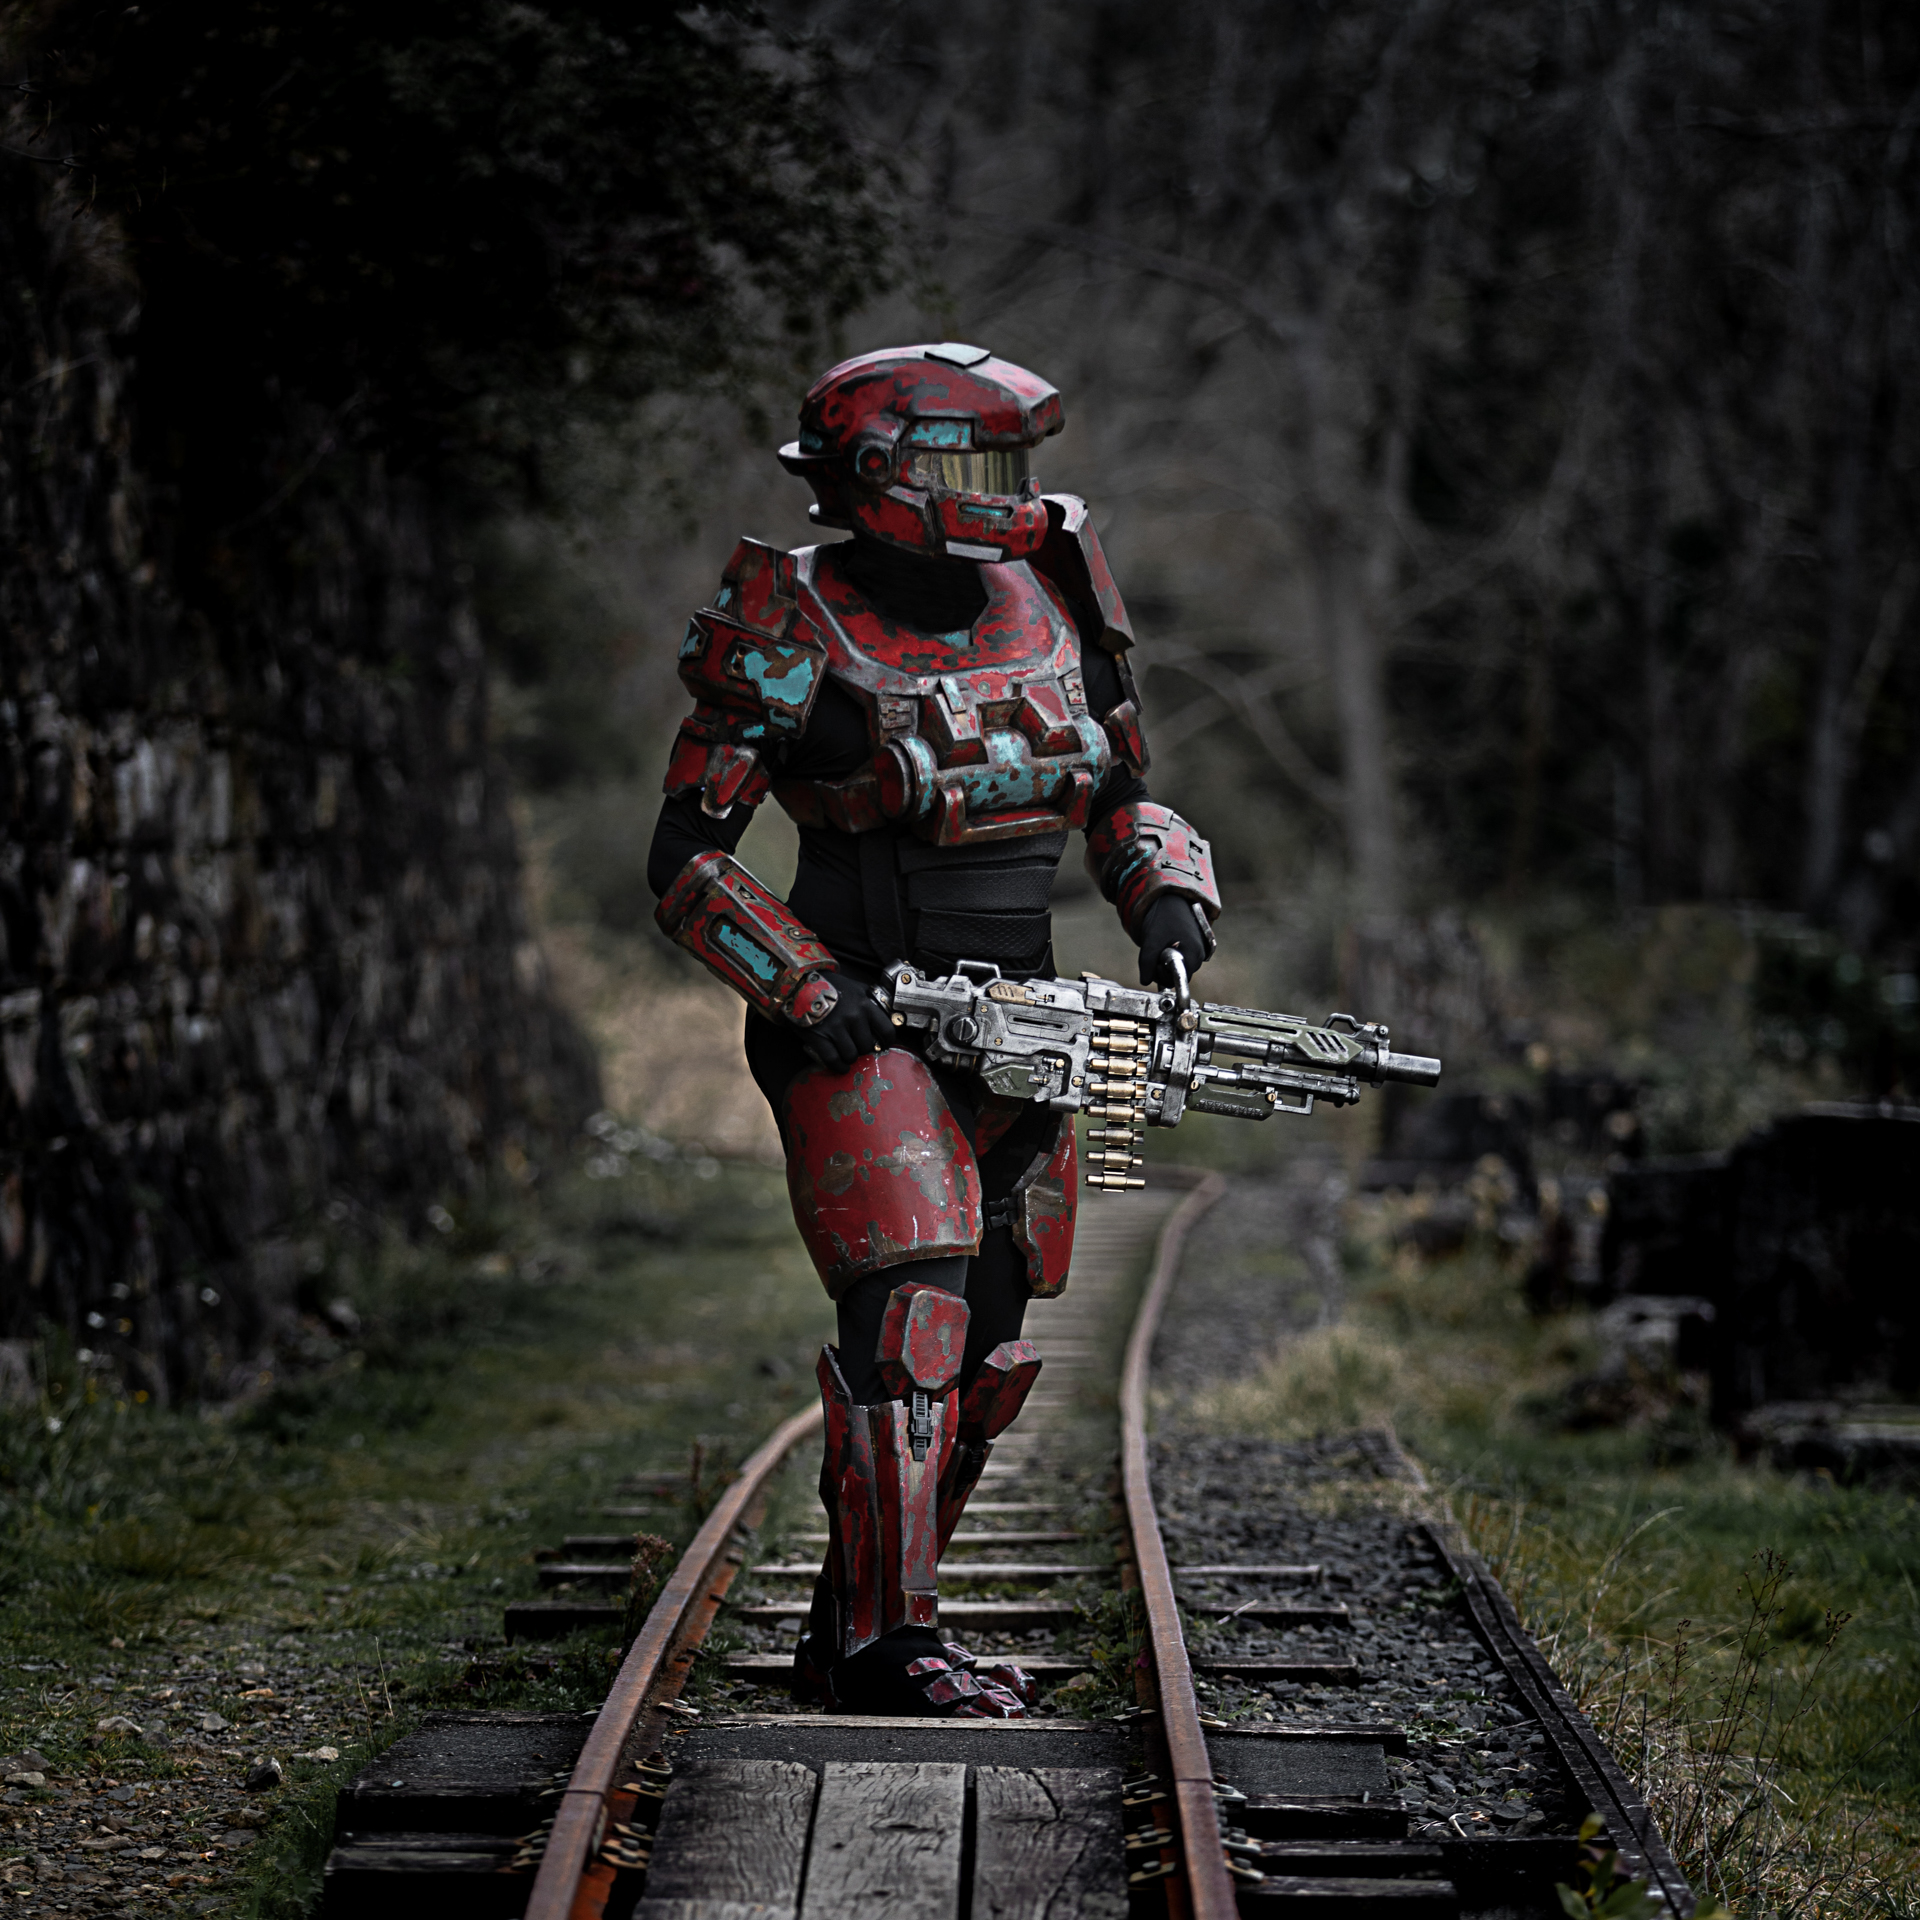 Halo cosply soilder walking the railway tracks